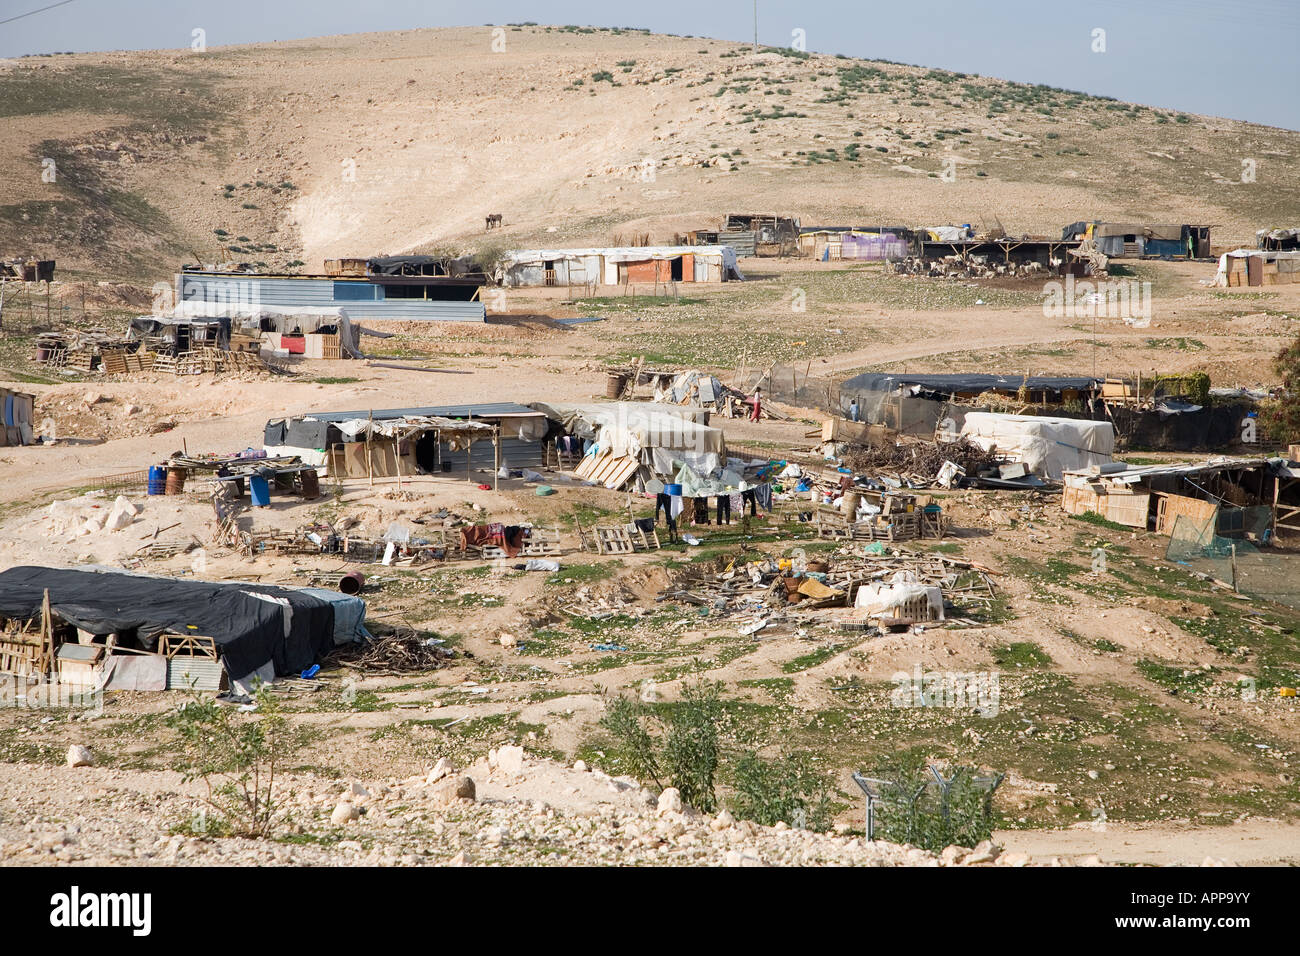 Stock Photo of a Bedouin Encampment in The Judean Desert Stock Photo